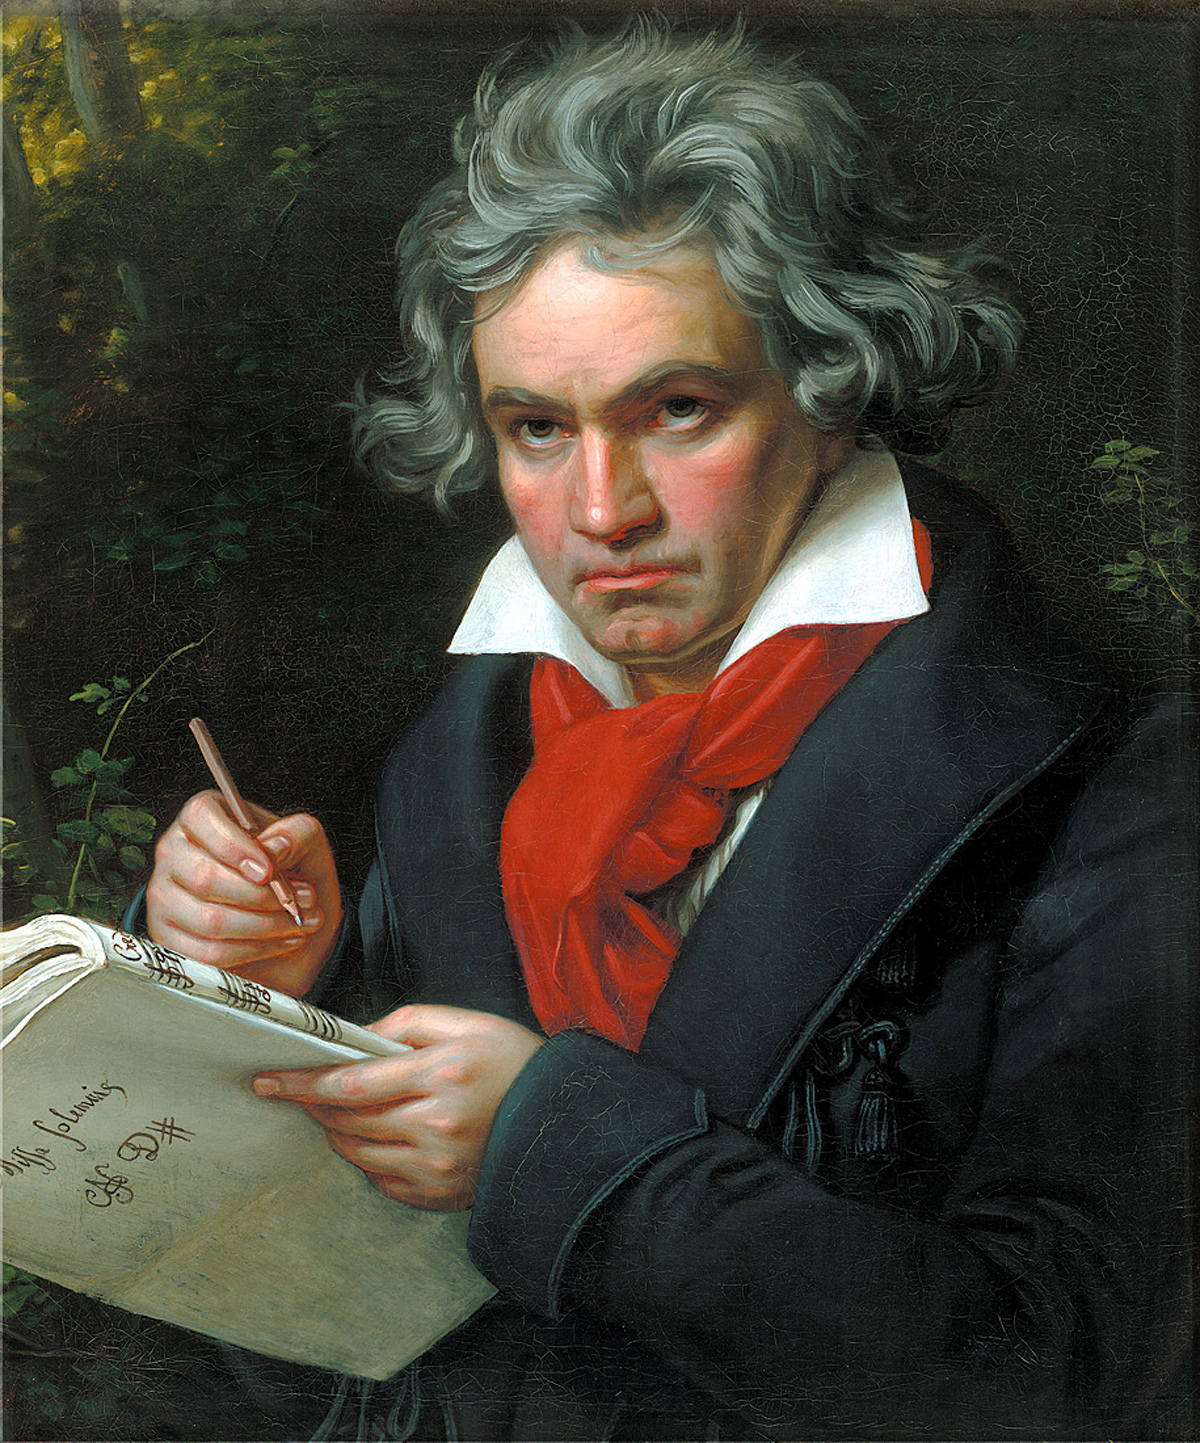 Ludwig van Beethoven - Symphony 9, Op. 125